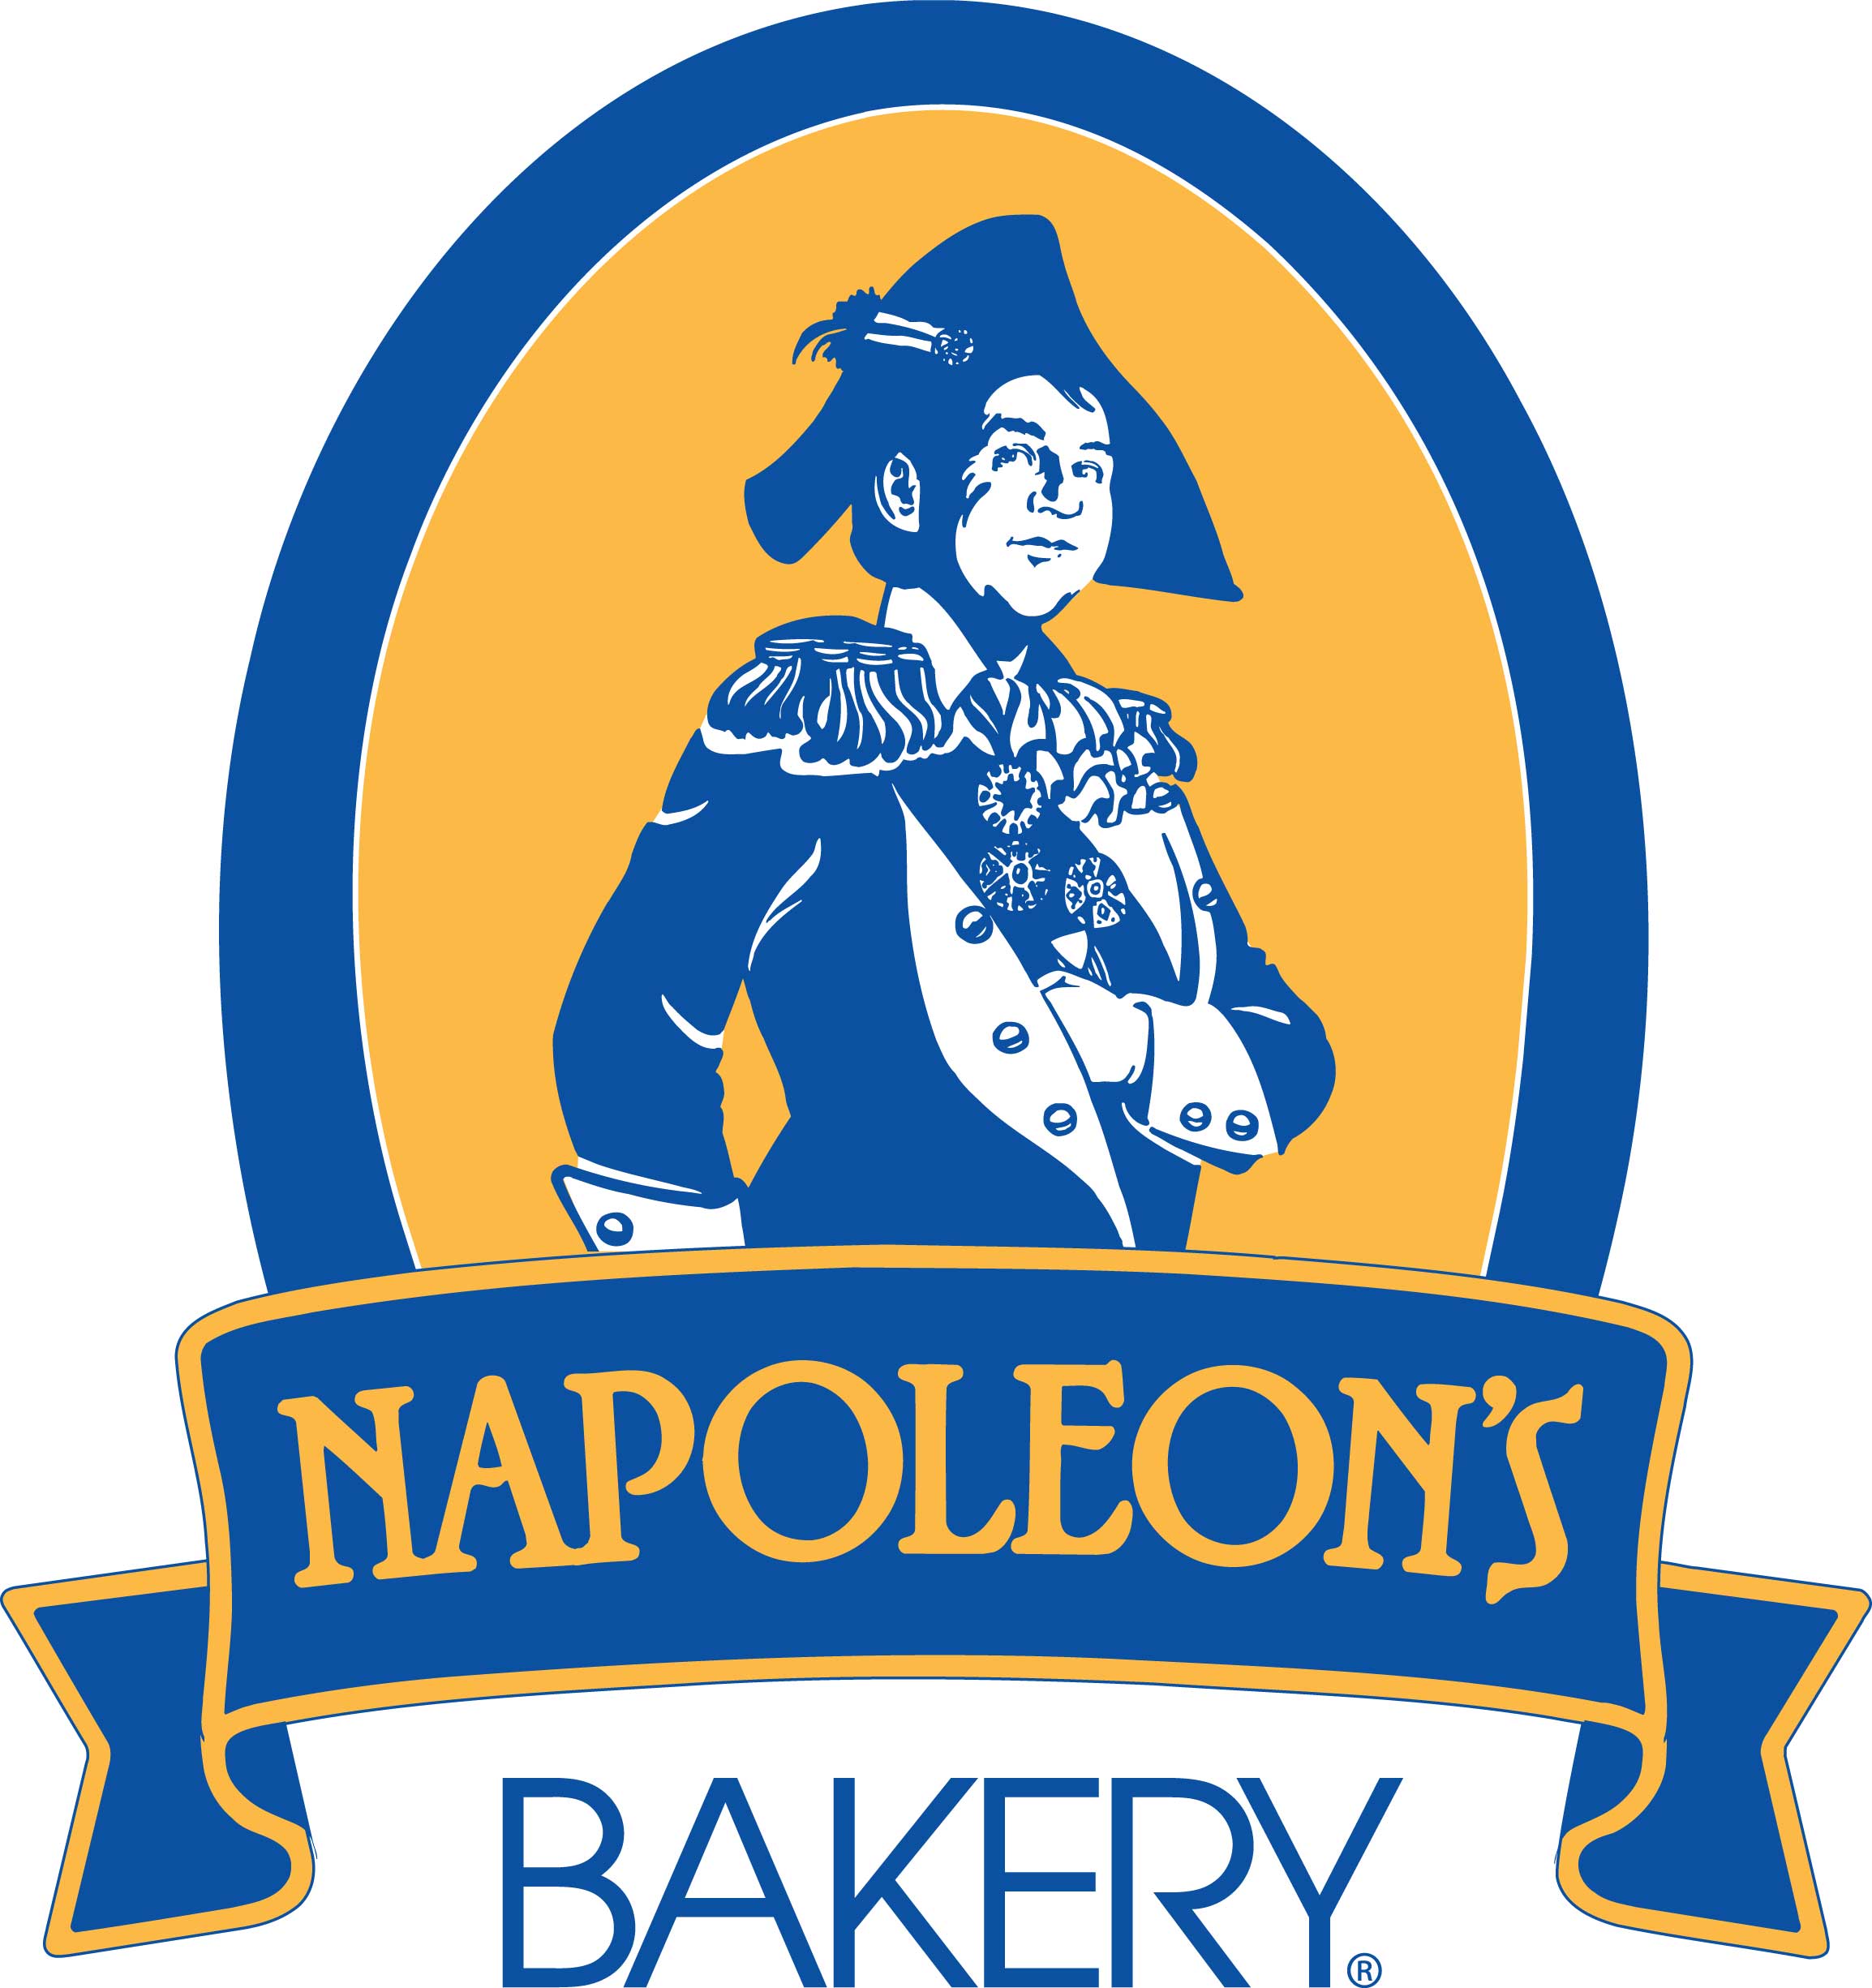 Napoleon's Bakery